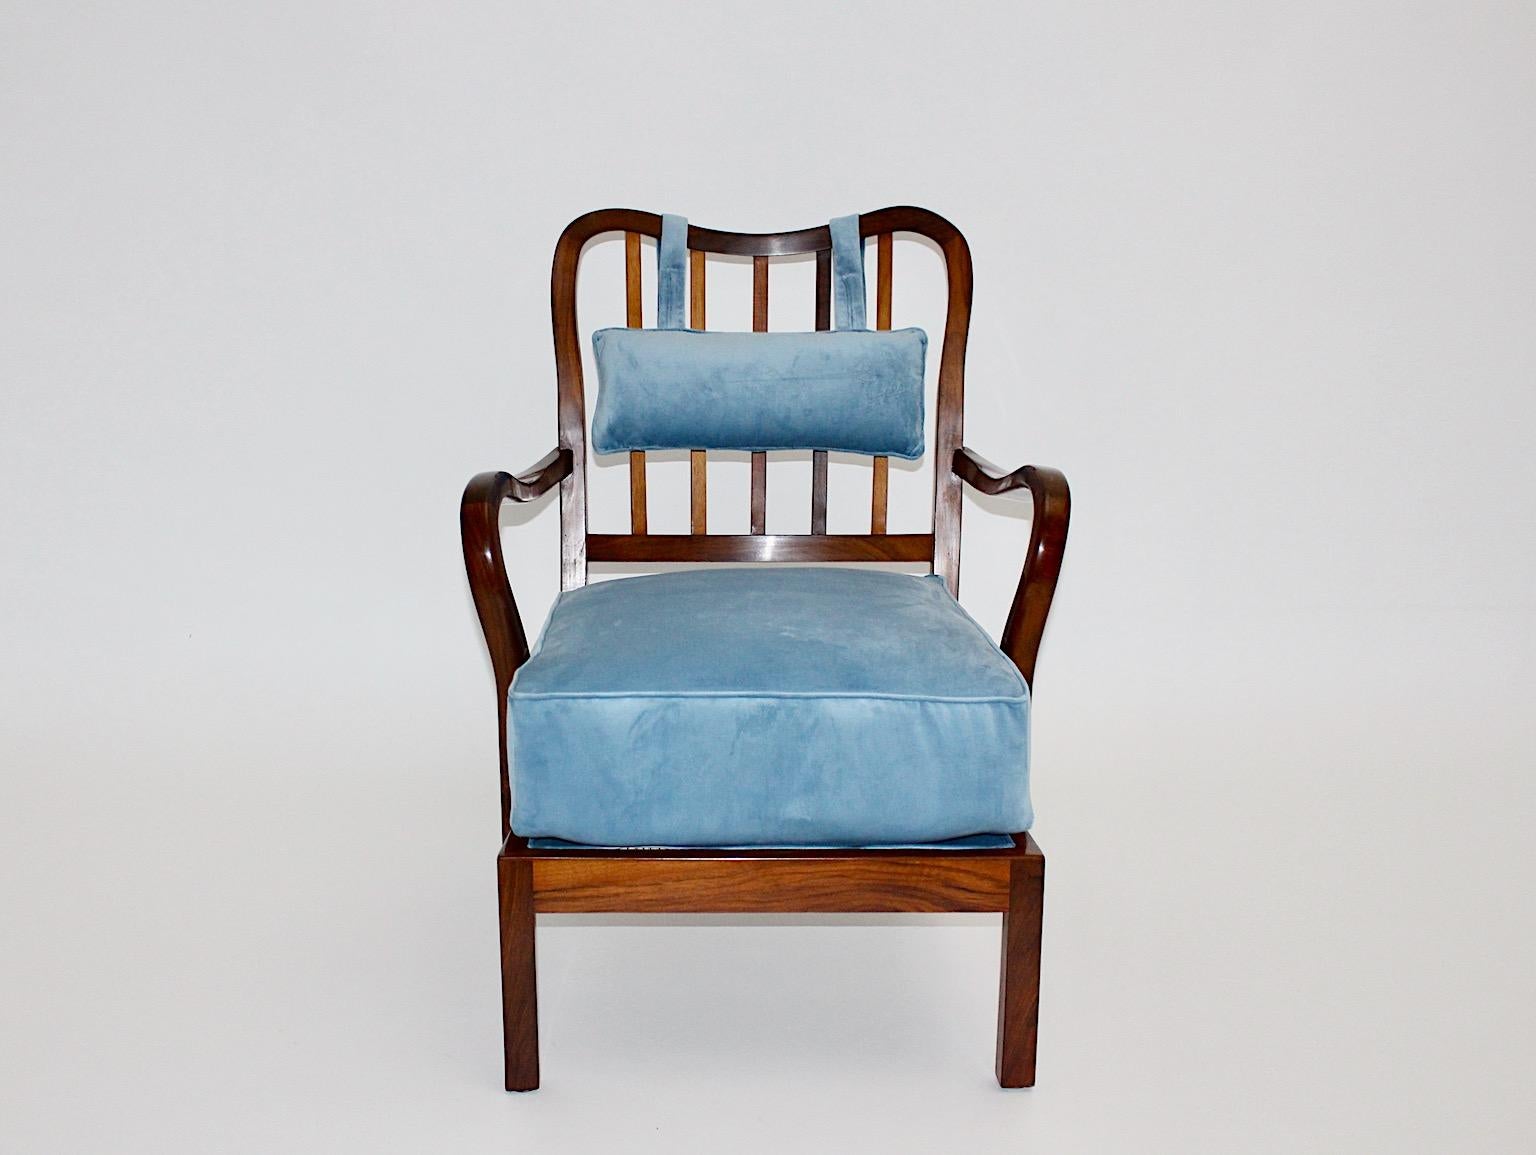 Mid-20th Century Art Deco Walnut Vintage Lounge Chair Armchair Attr. Oswald Haerdtl 1930s Vienna For Sale